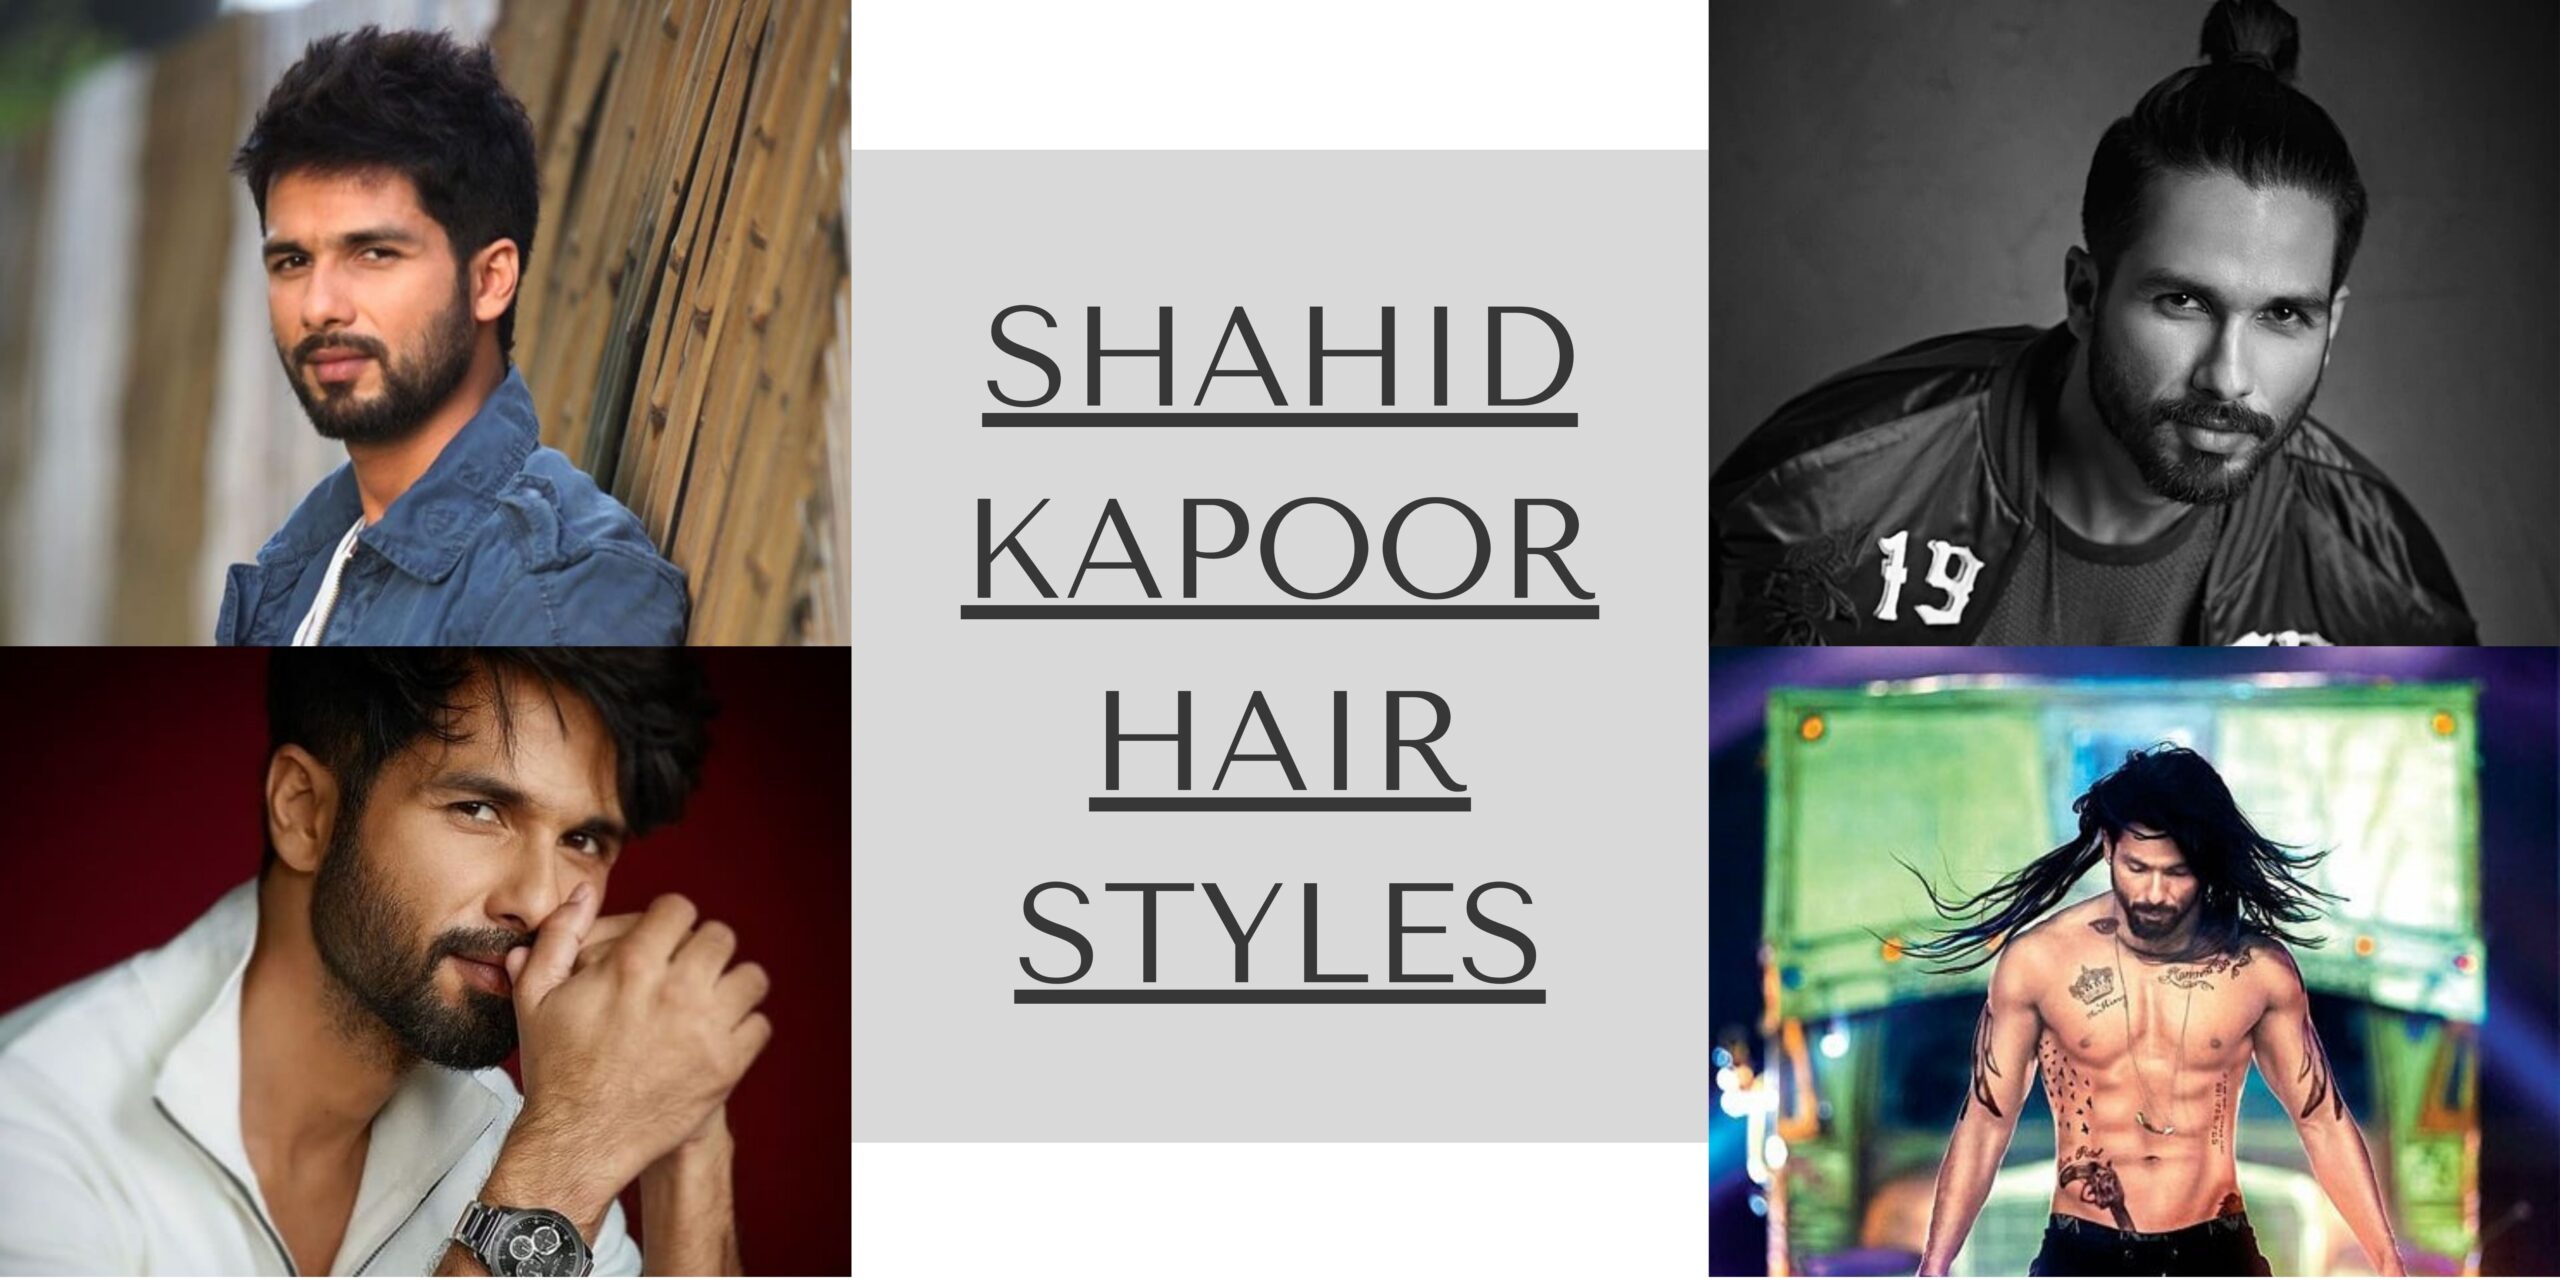 shahid kapoor hd wallpaper r rajkumar,hair,face,facial hair,forehead,beard  (#463106) - WallpaperUse